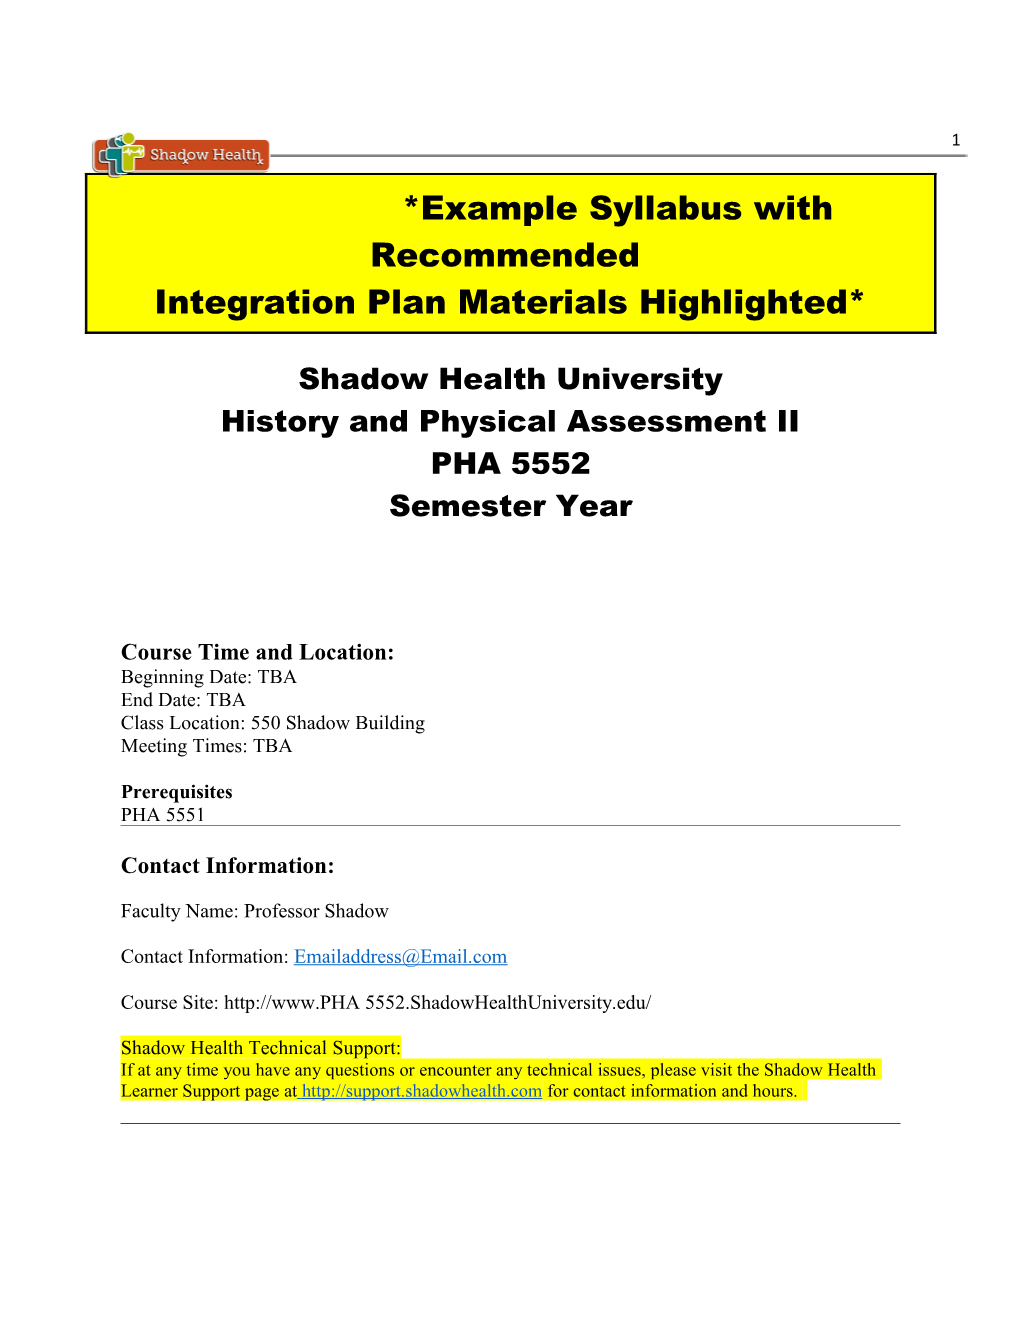 Graduate 16 Weeks / In-Person: Shadow University Syllabus